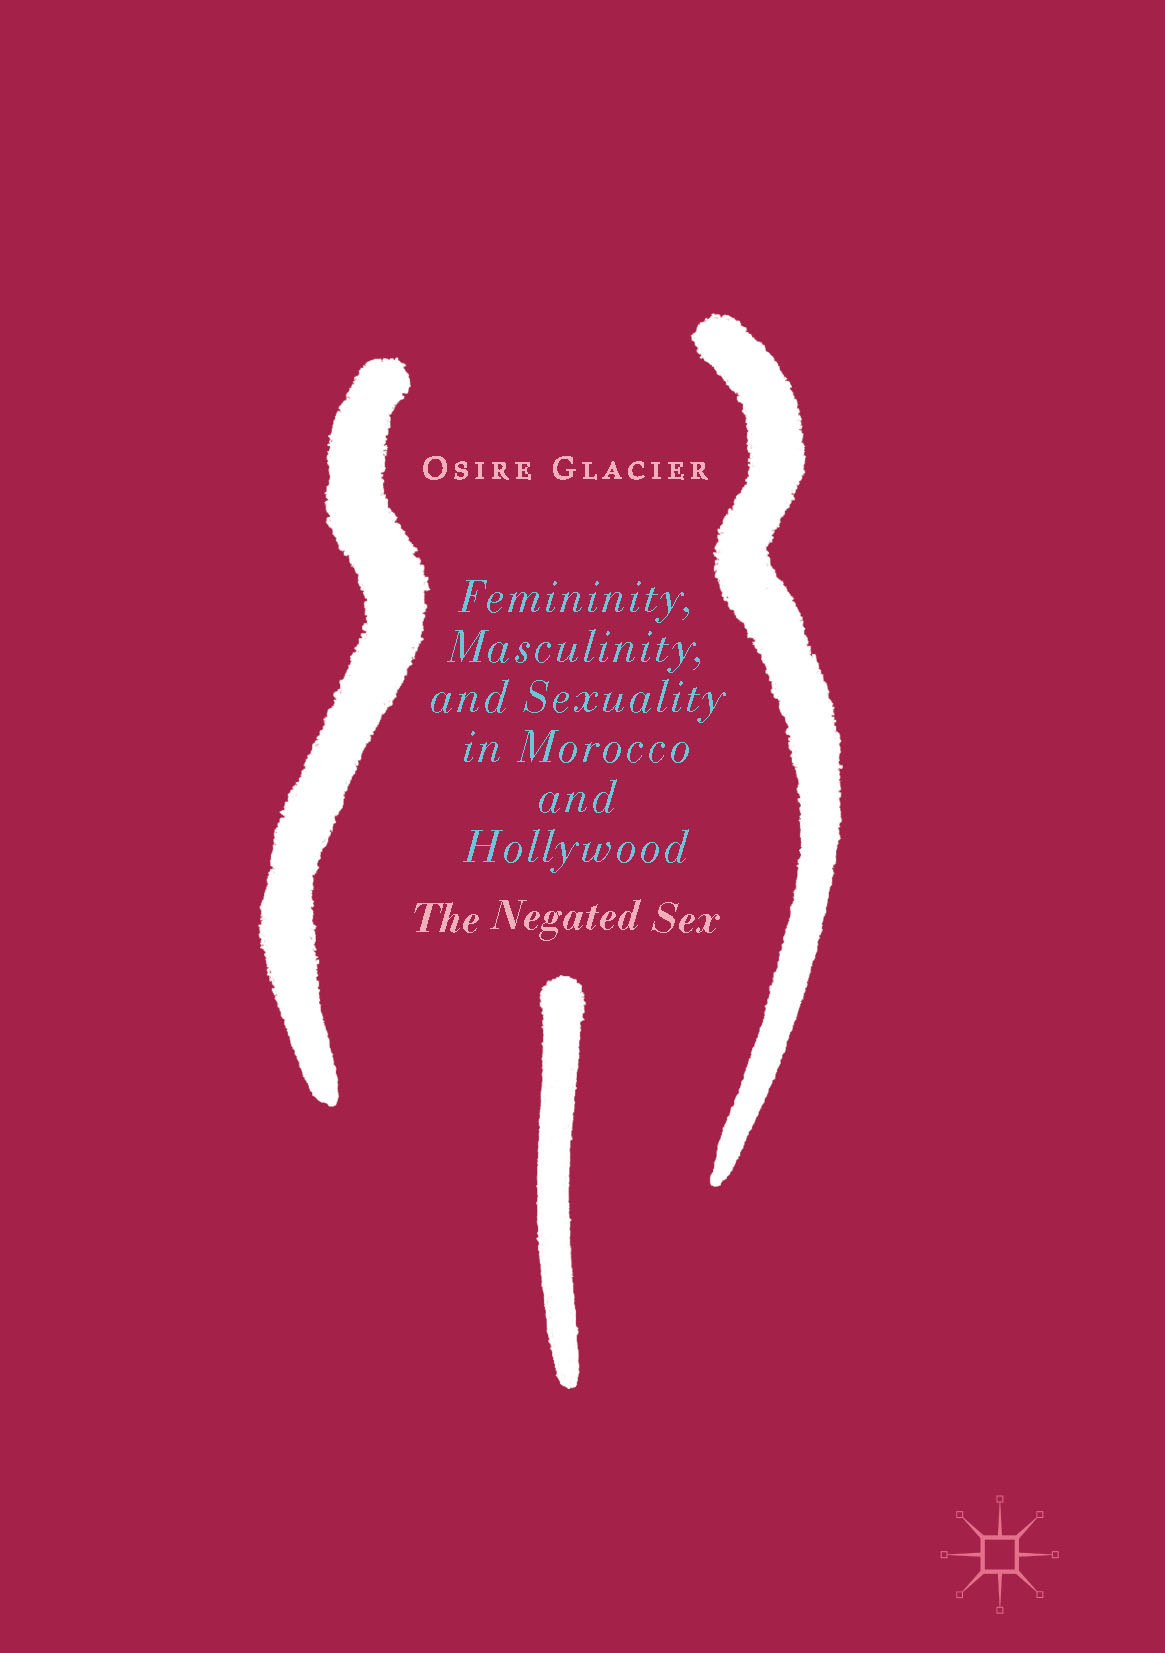 Glacier, Osire - Femininity, Masculinity, and Sexuality in Morocco and Hollywood, e-kirja